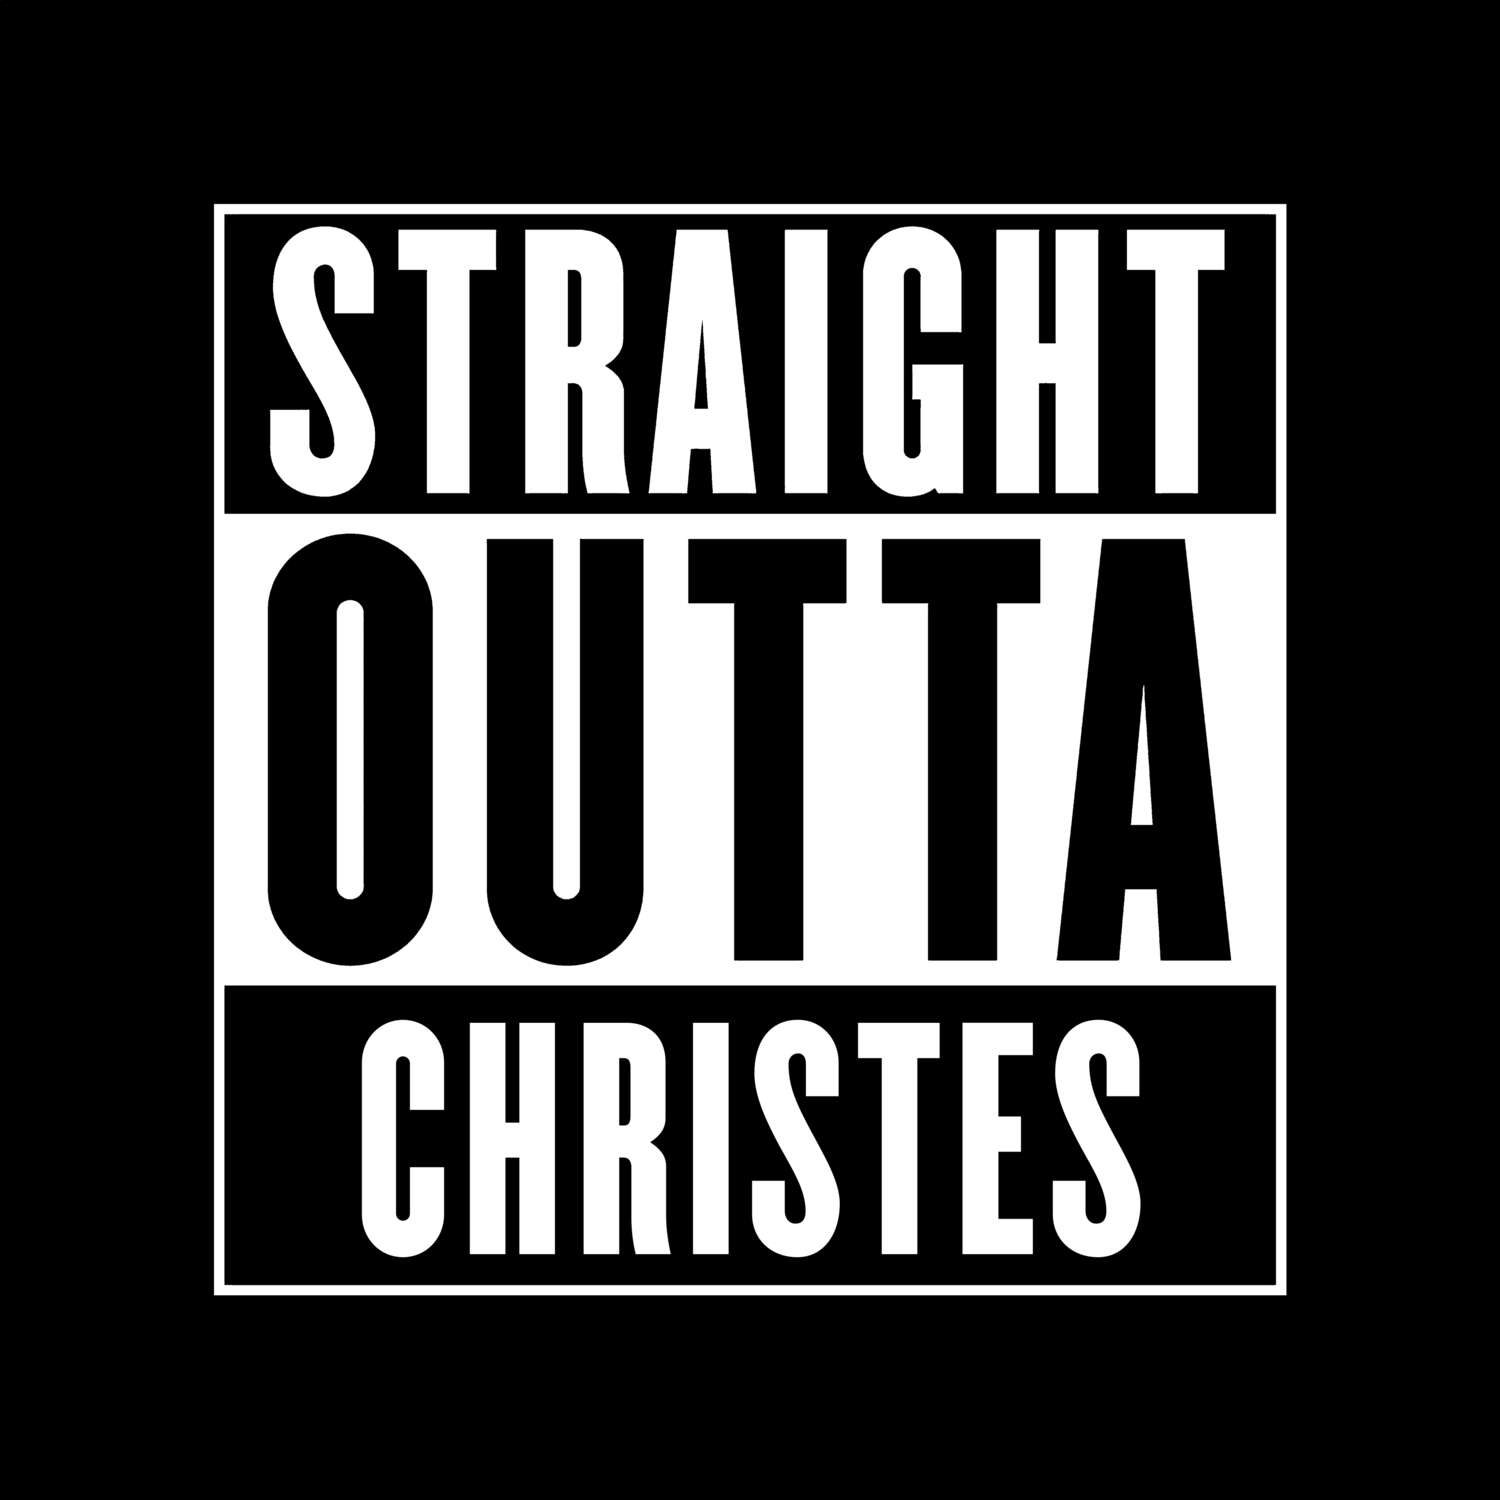 Christes T-Shirt »Straight Outta«